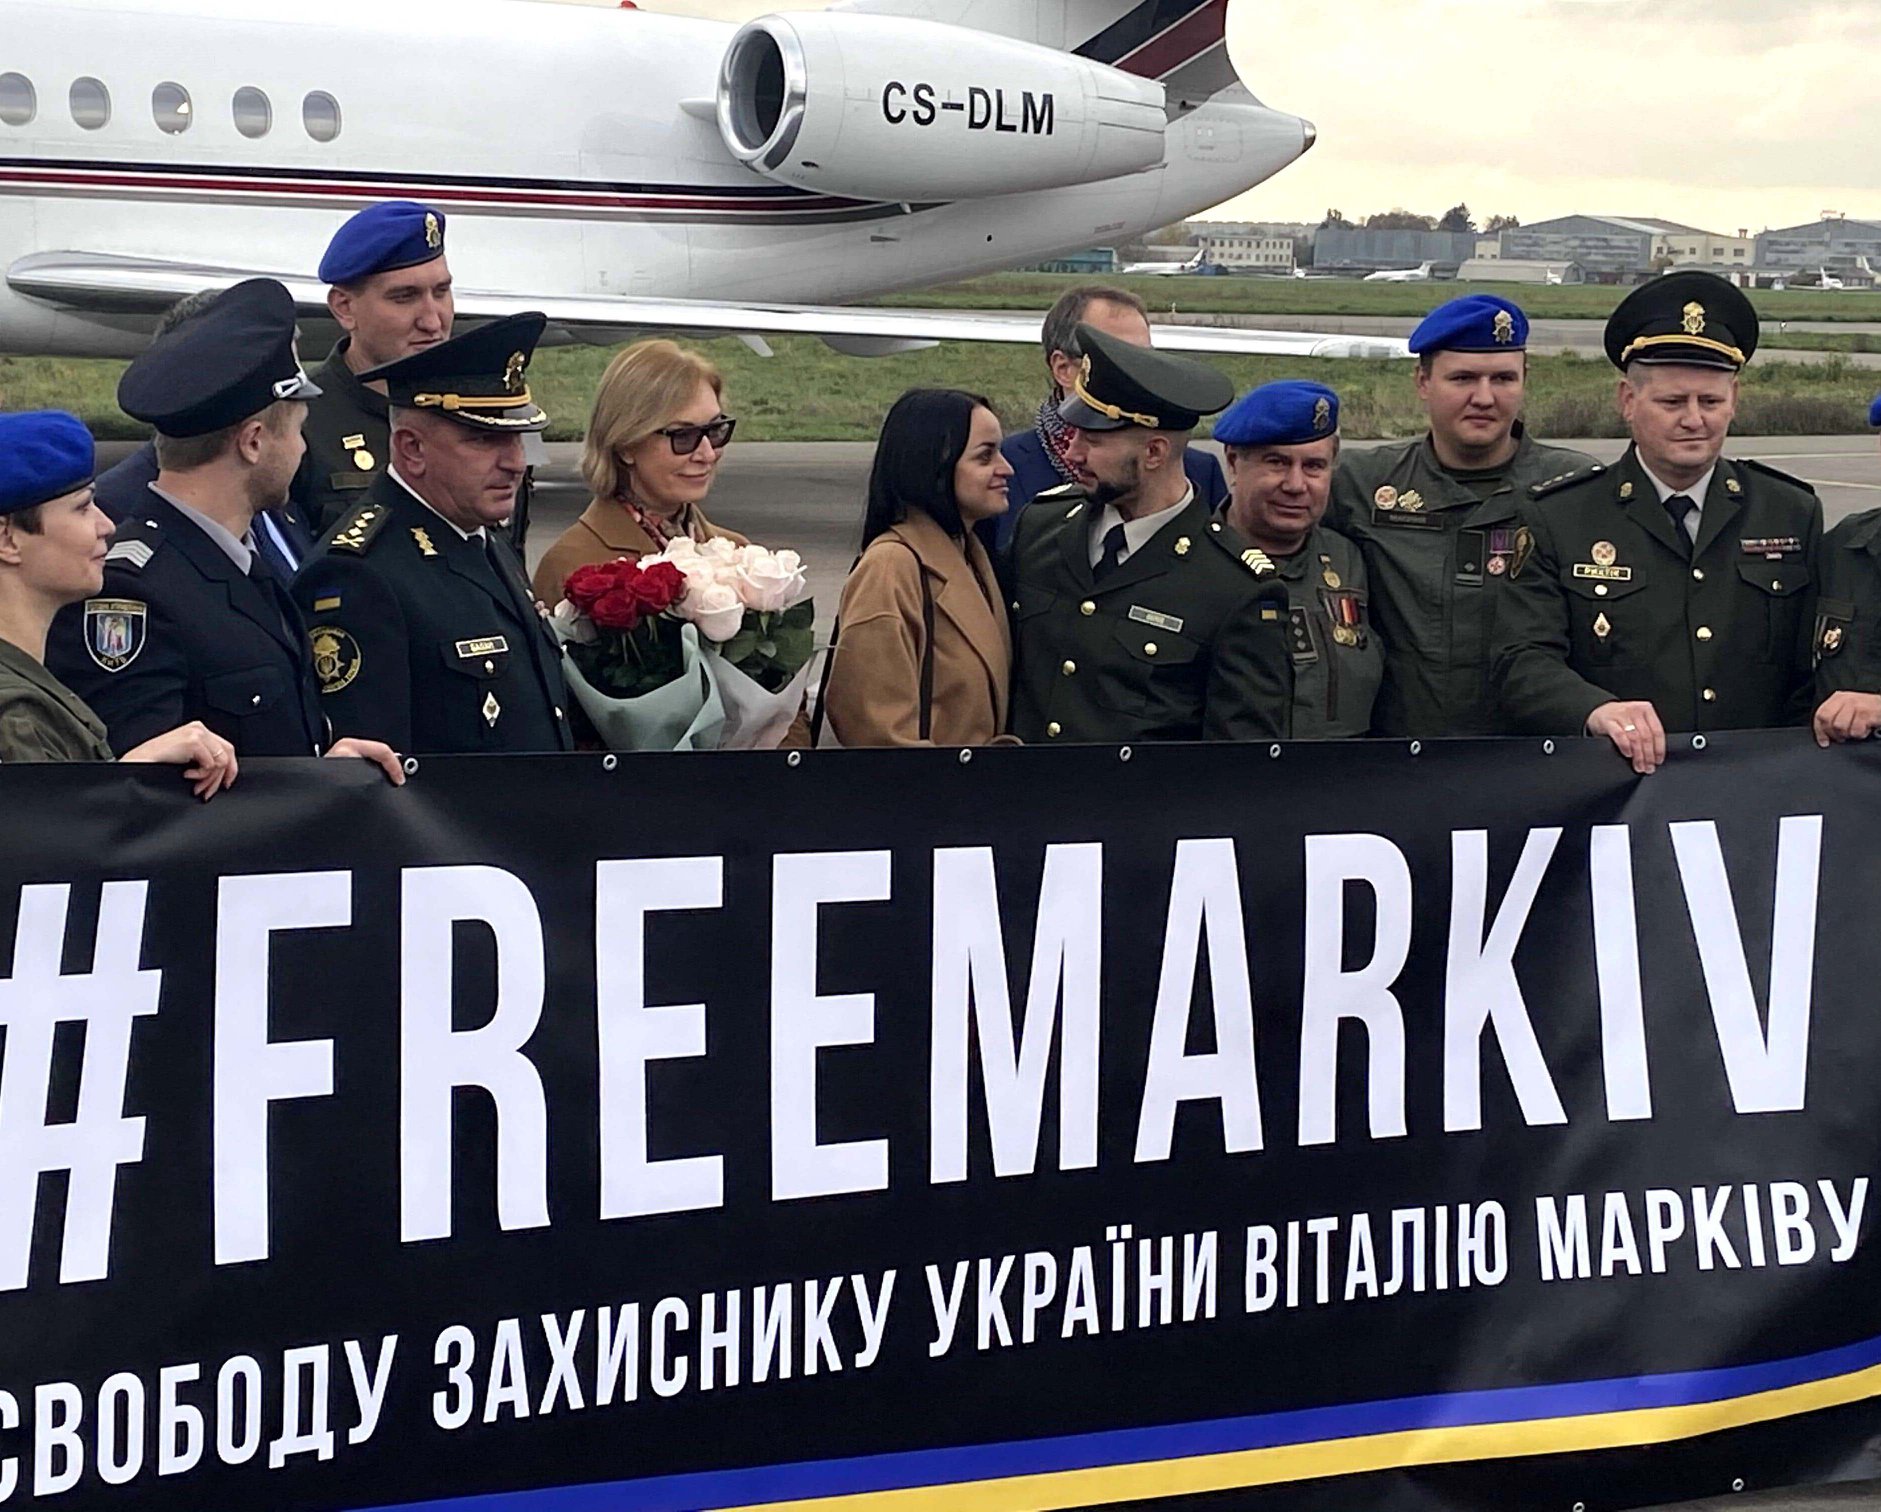 Vitaliy Markiv comes home as truth & justice prevail over covert Russian propaganda ~~